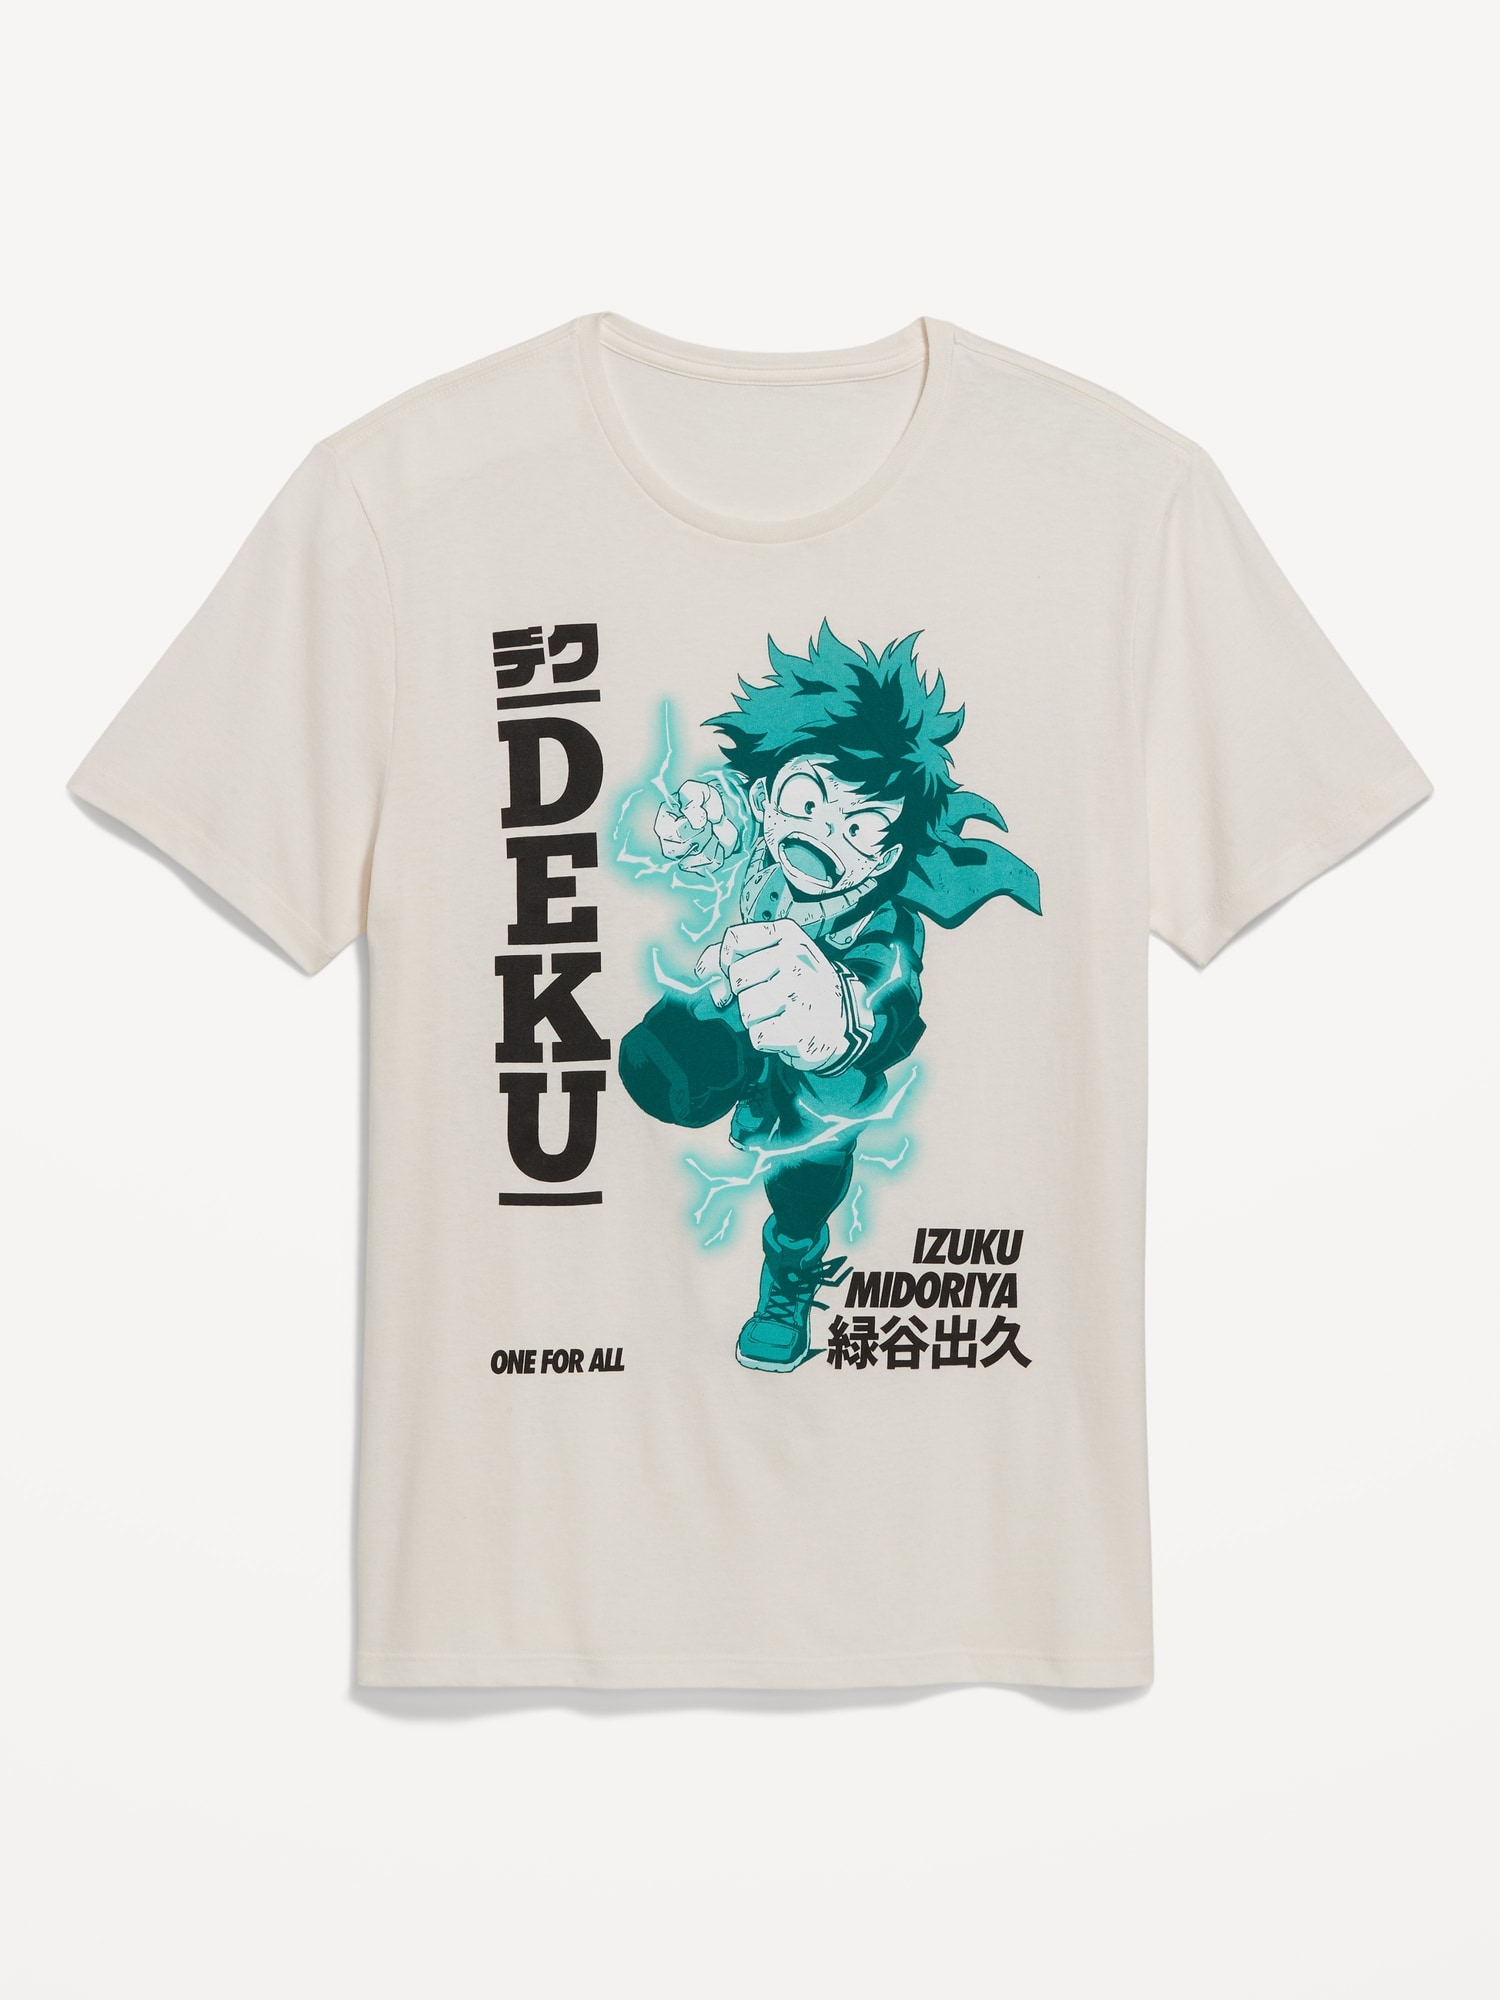 My Hero Deku Gender-Neutral T-Shirt for Adults